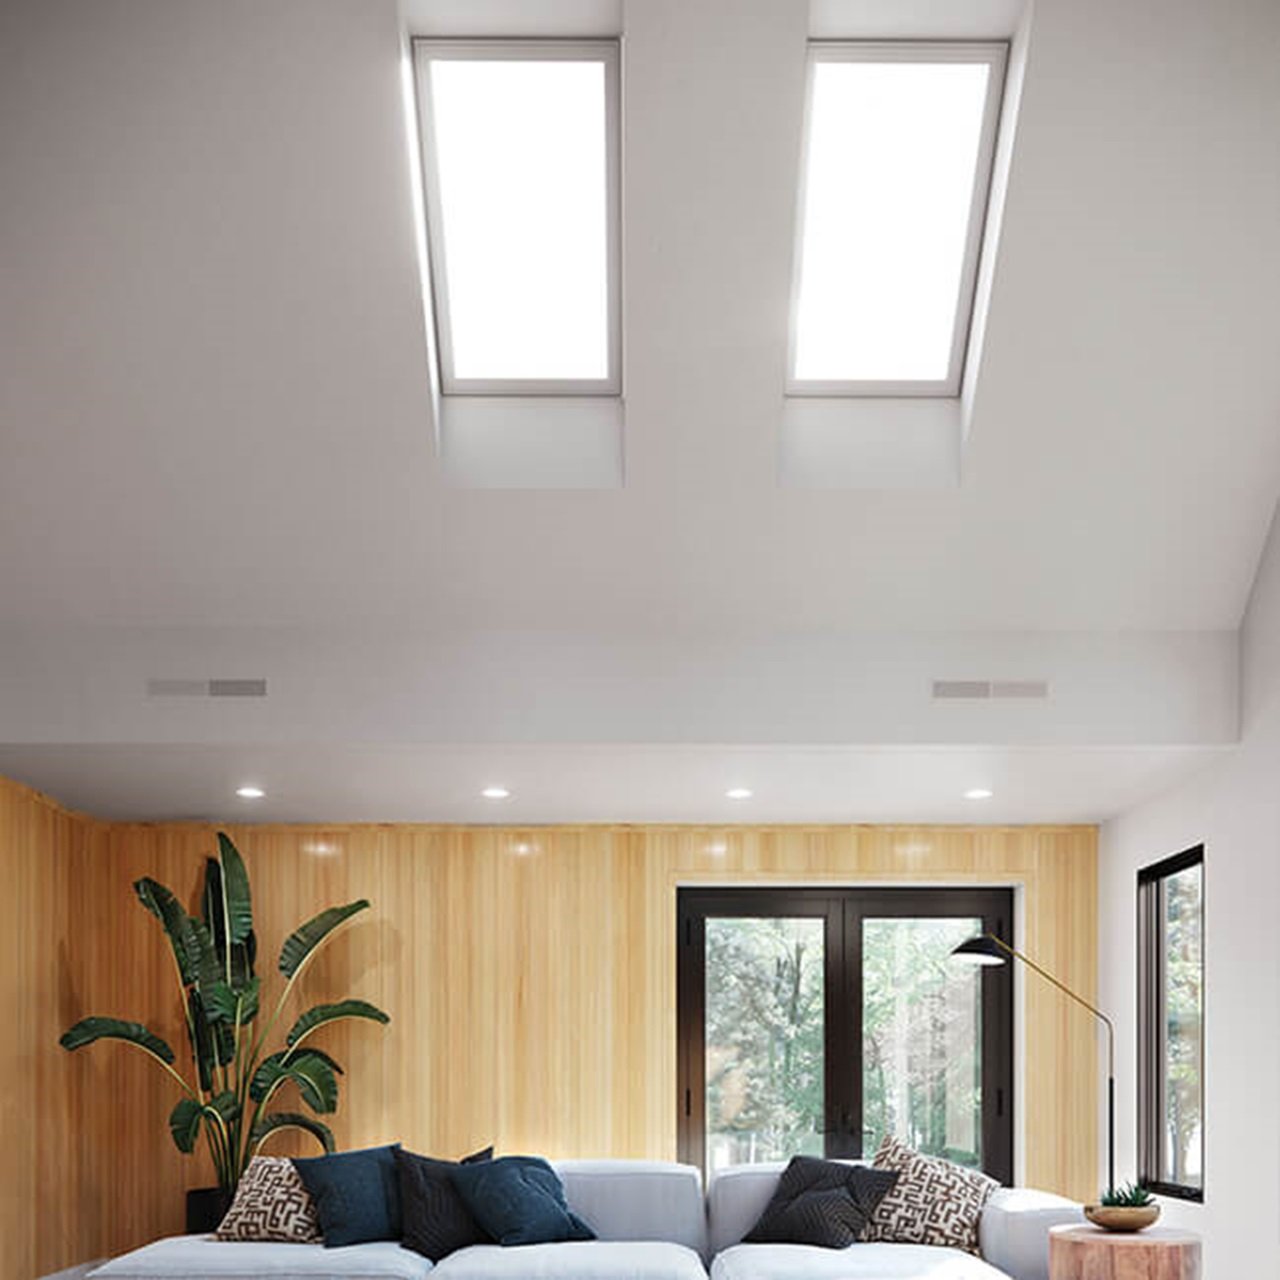 Interior of home with Marvin Awaken Skylights